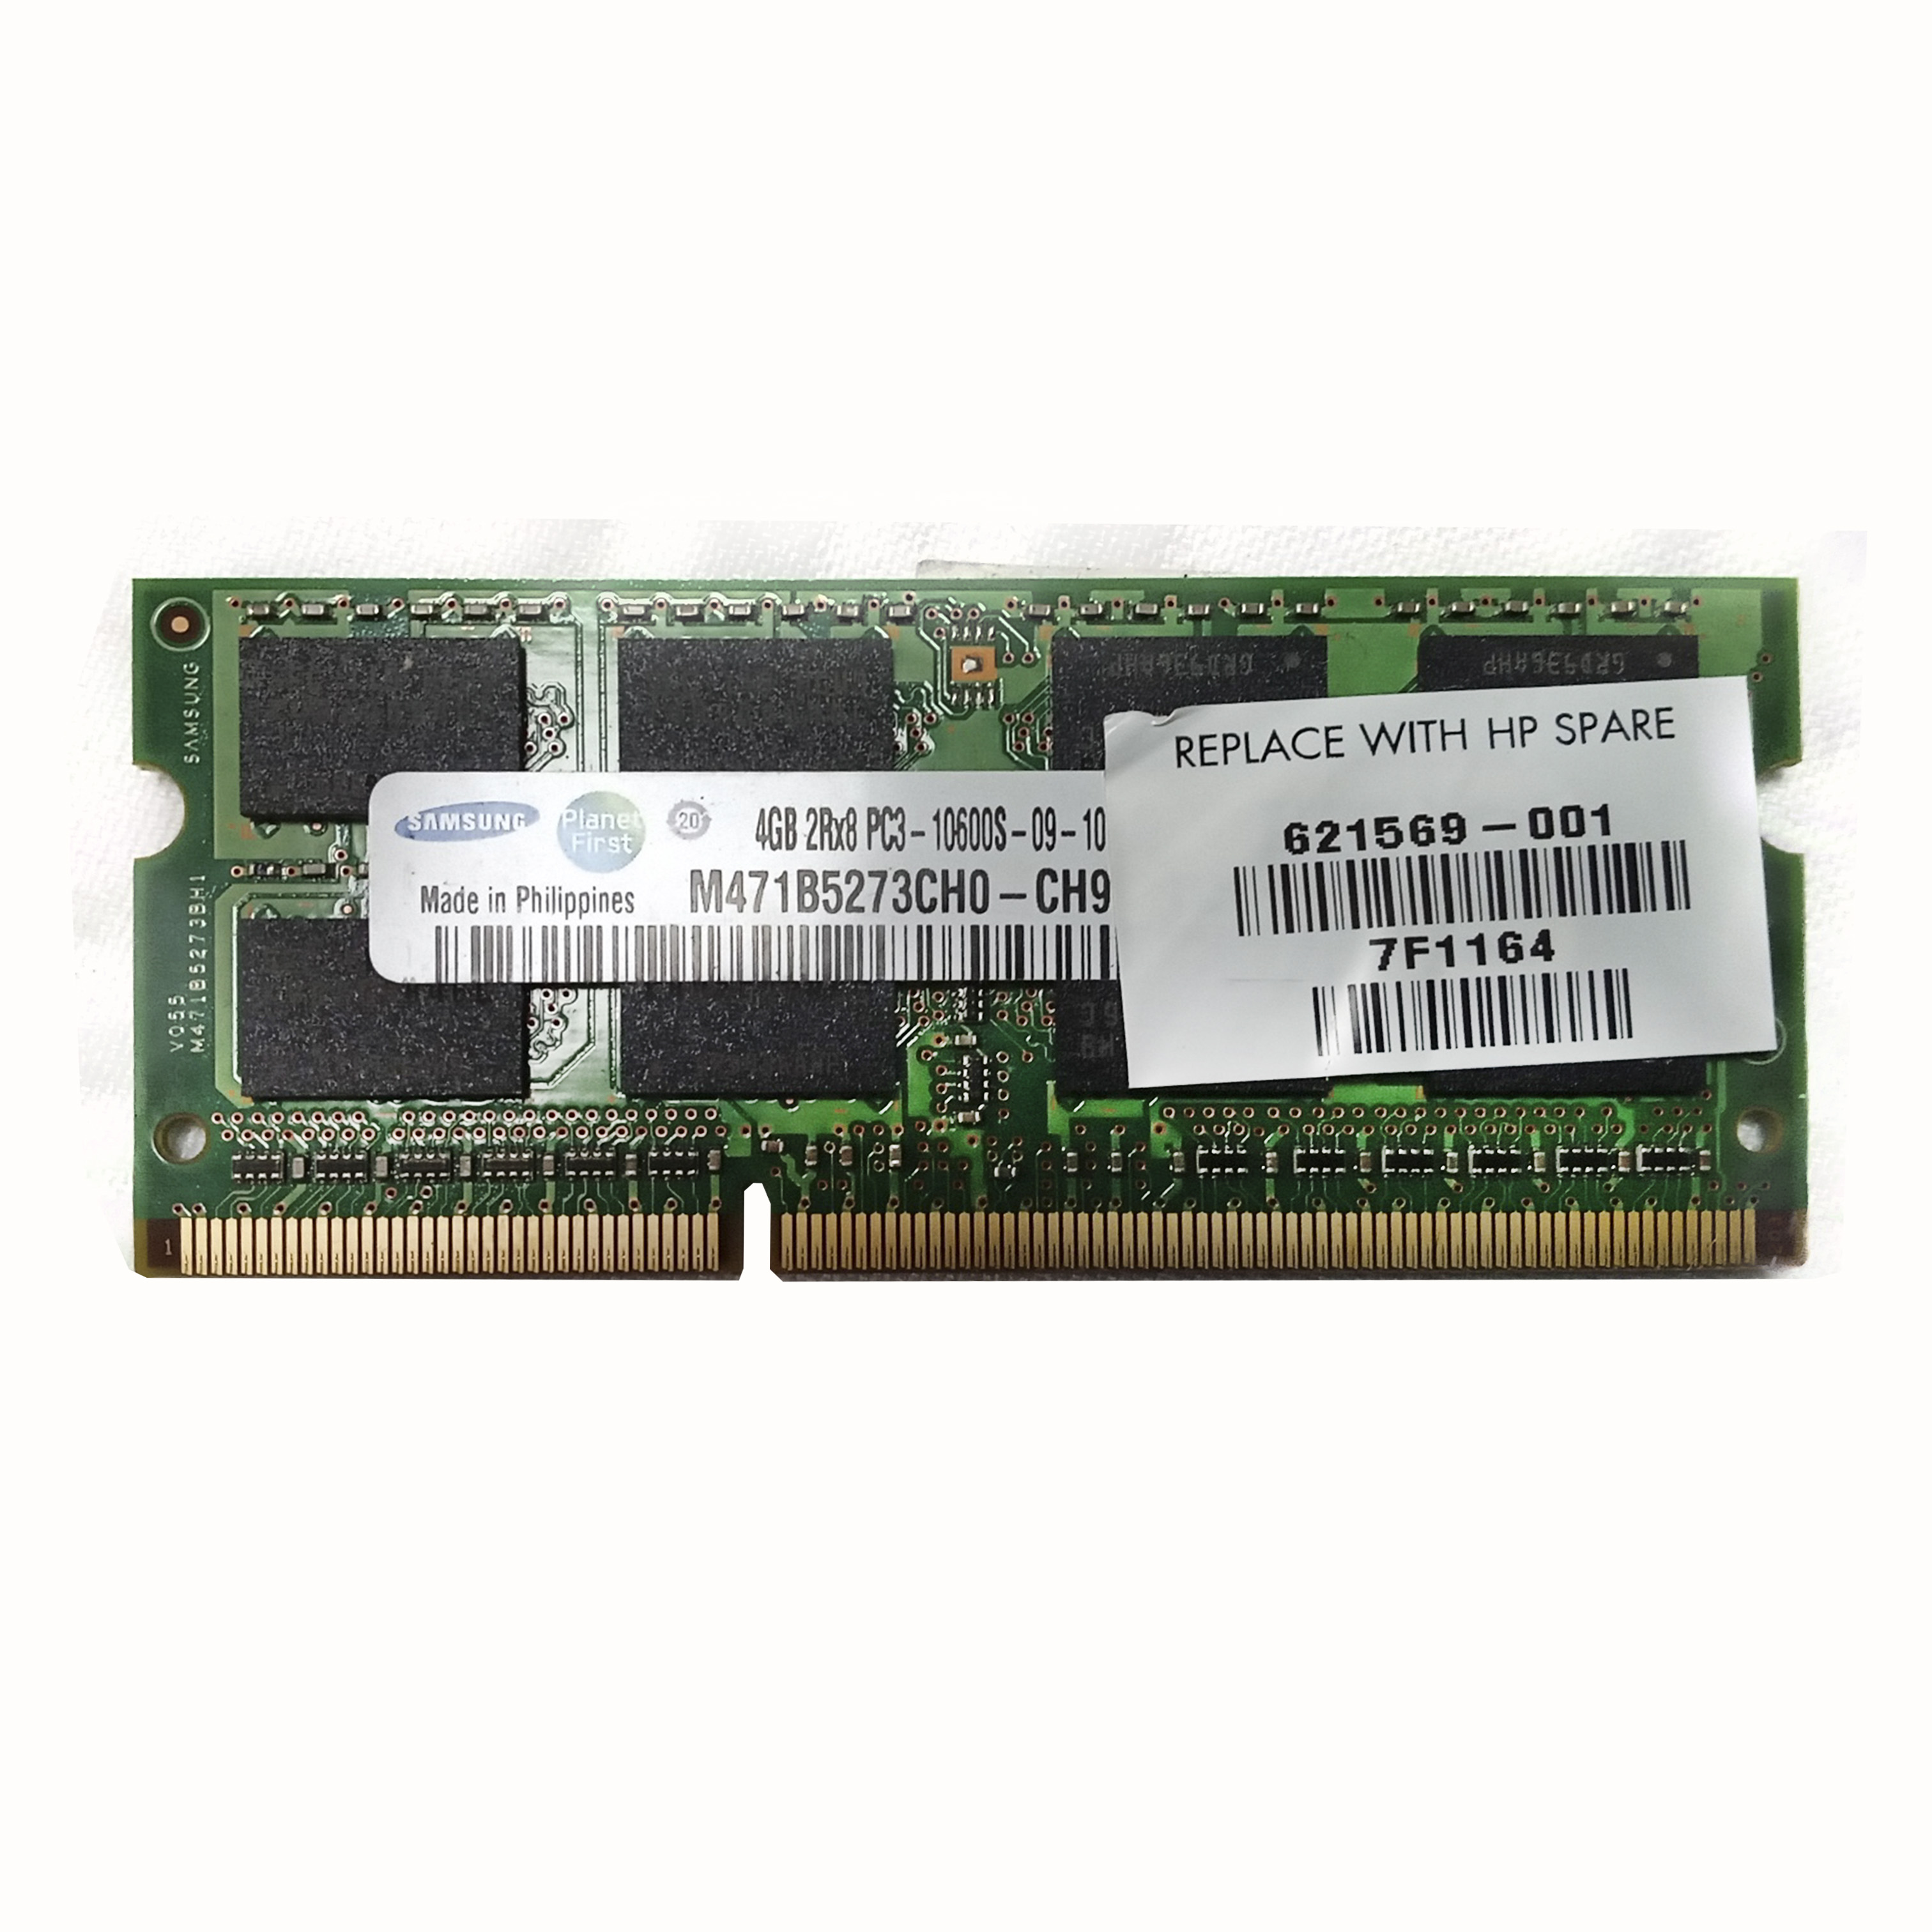 Оперативная память Samsung 4 ГБ DDR3 1333 МГц SODIMM CL9 M471B5273CH0-CH9 б/у